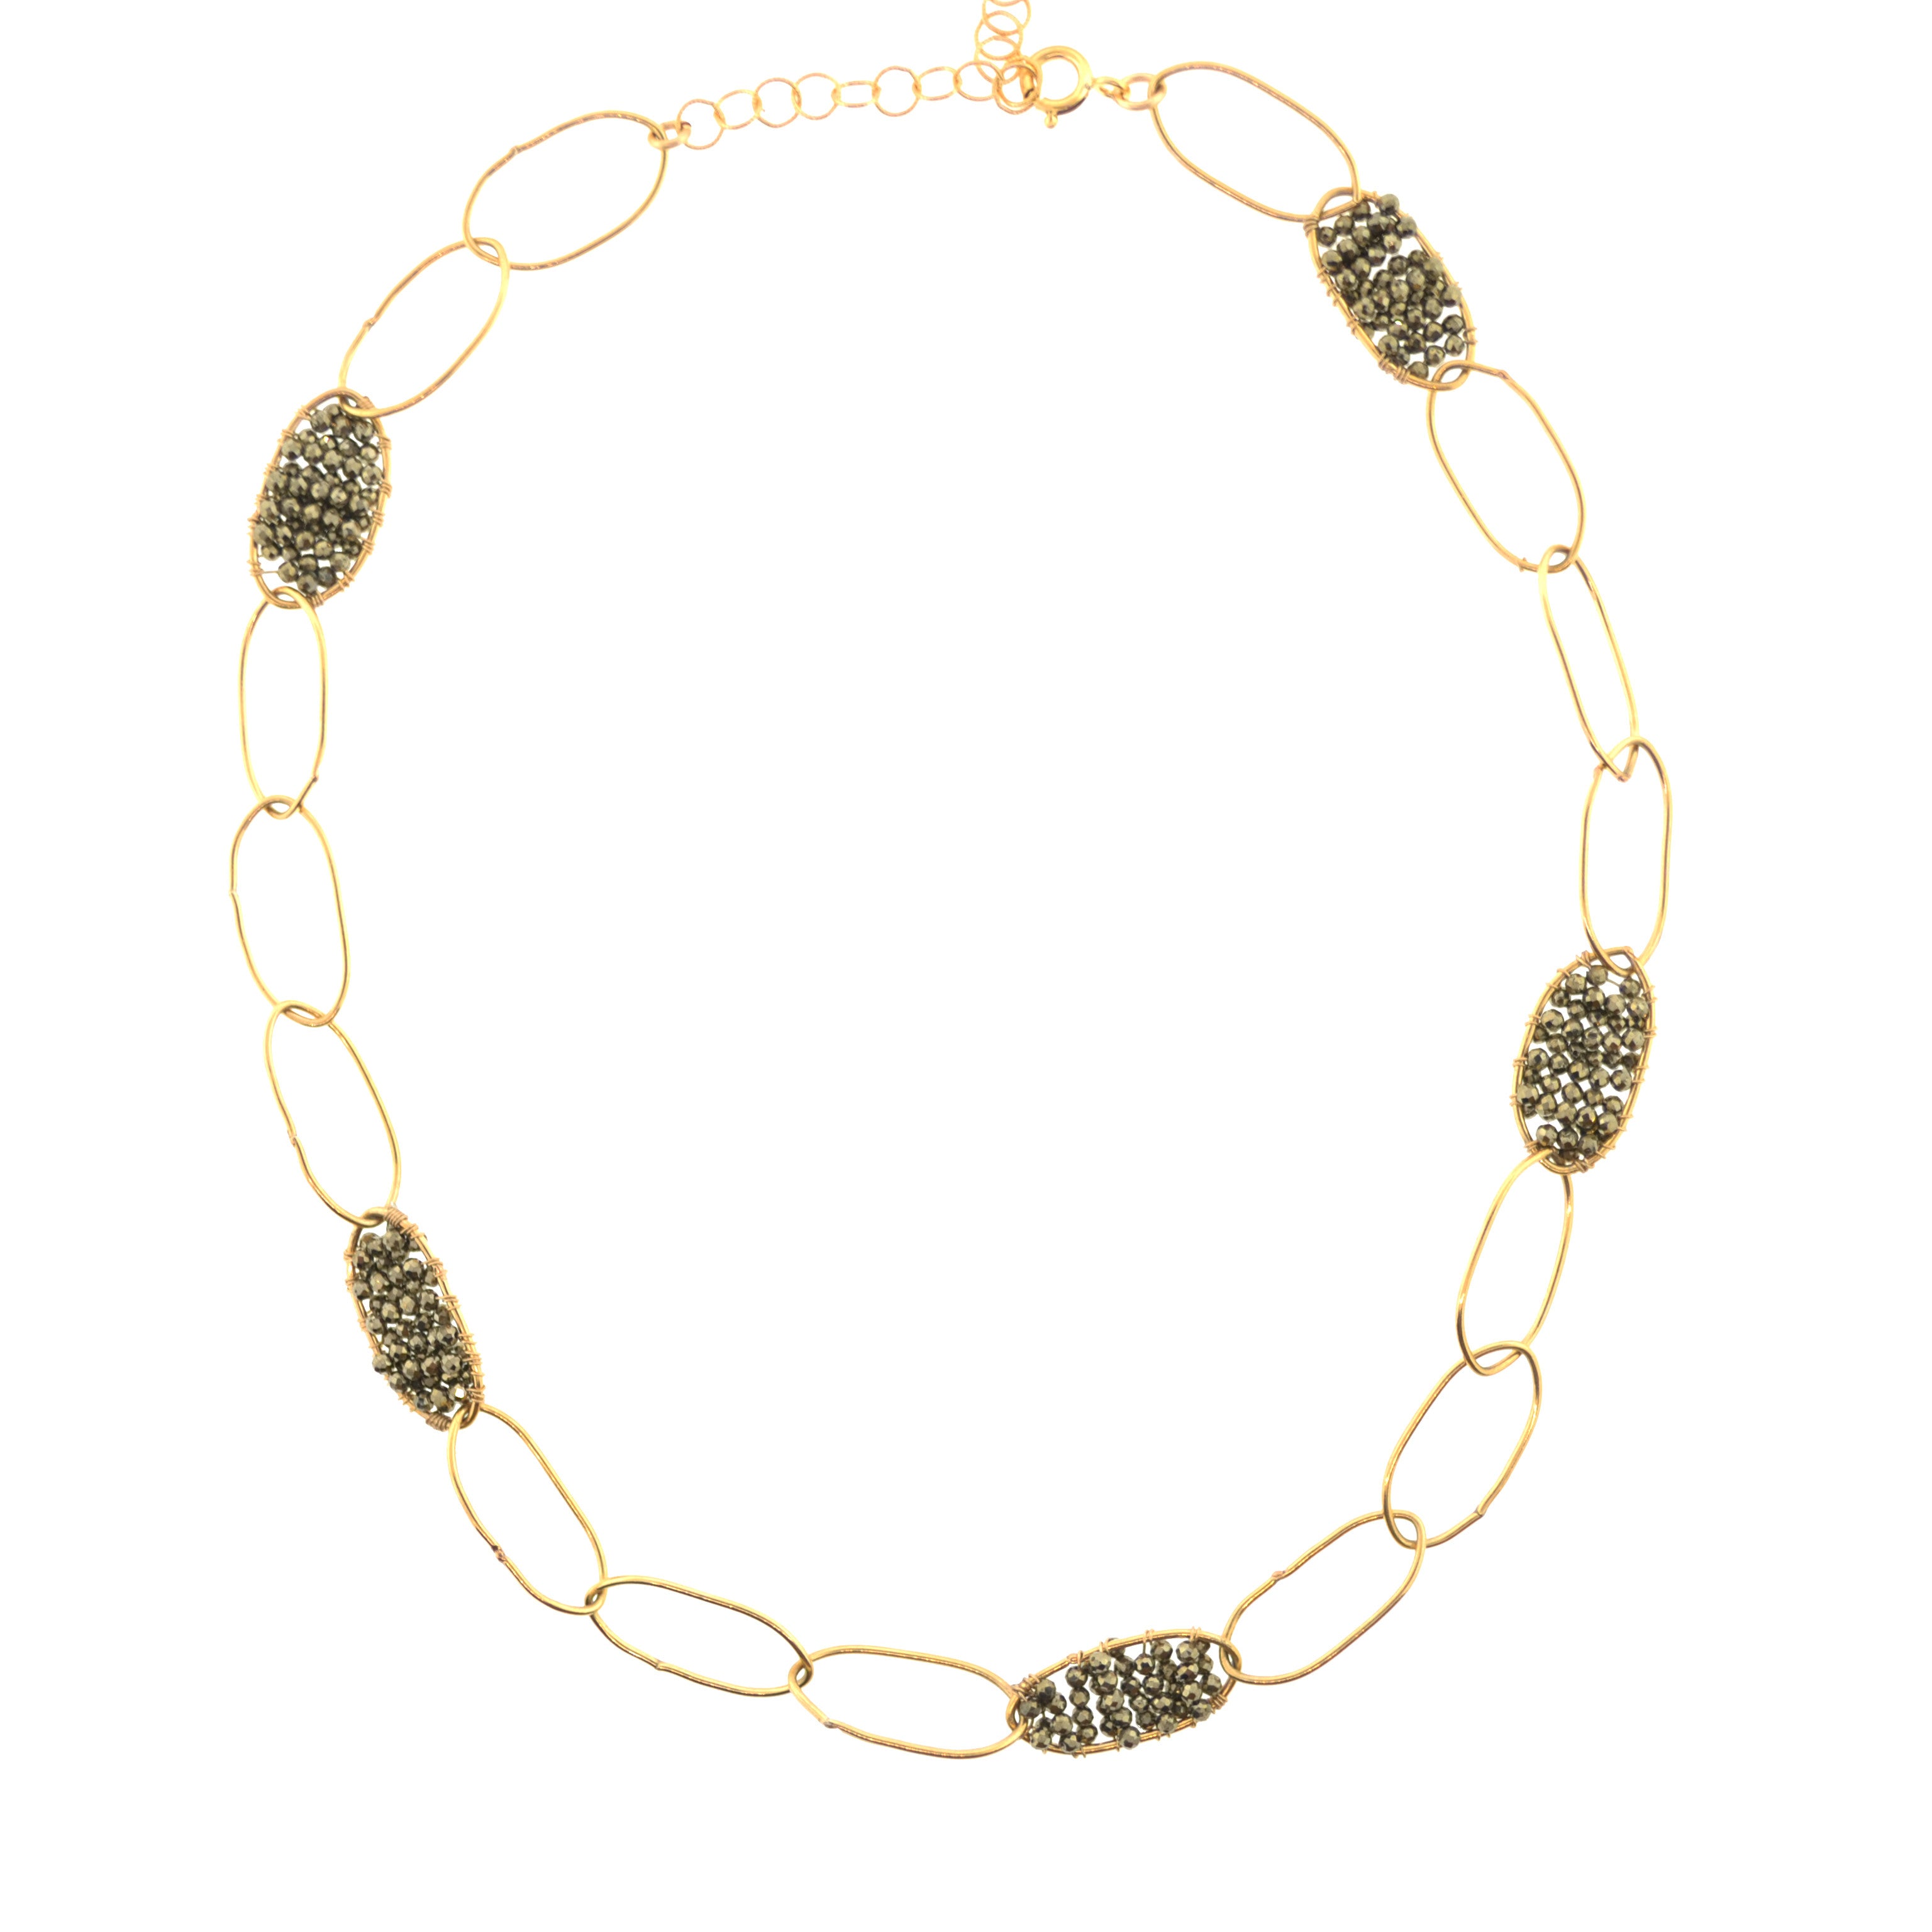 Woven Pyrite Necklace - Short